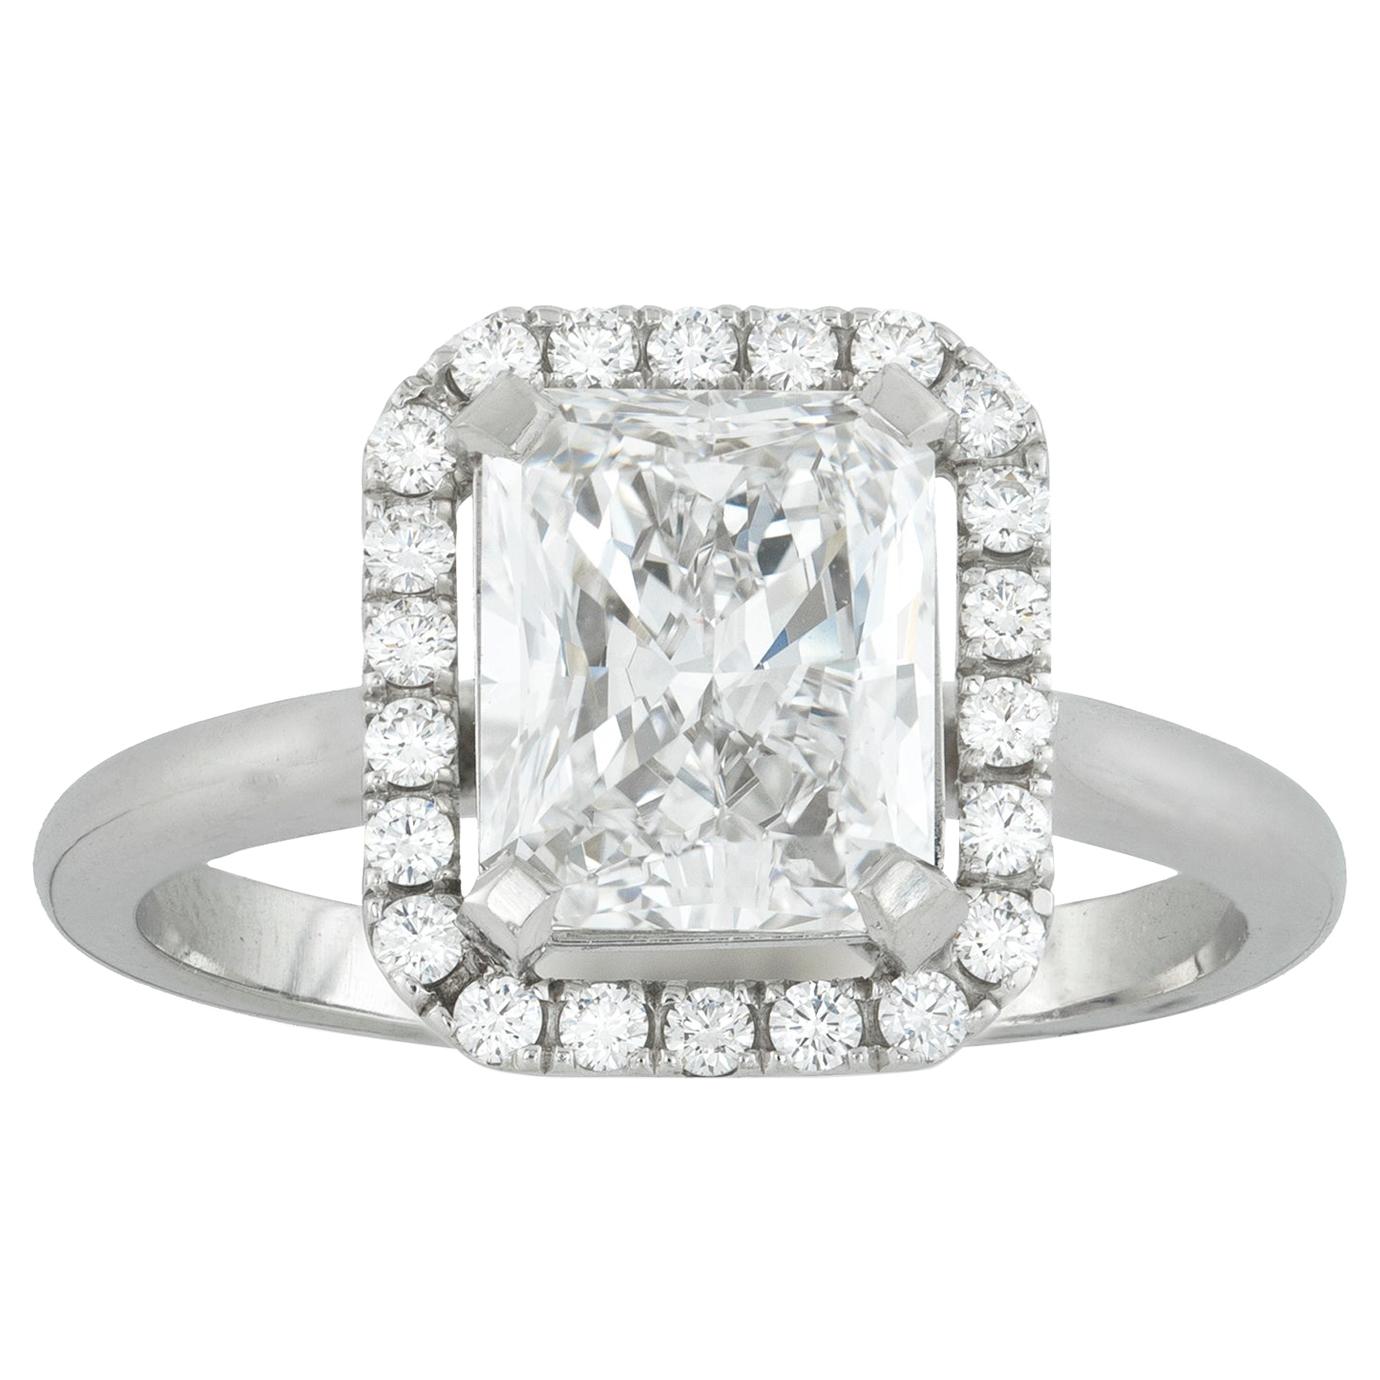 GIA Certified 1.91 carat Radiant-Cut Diamond Cluster Ring